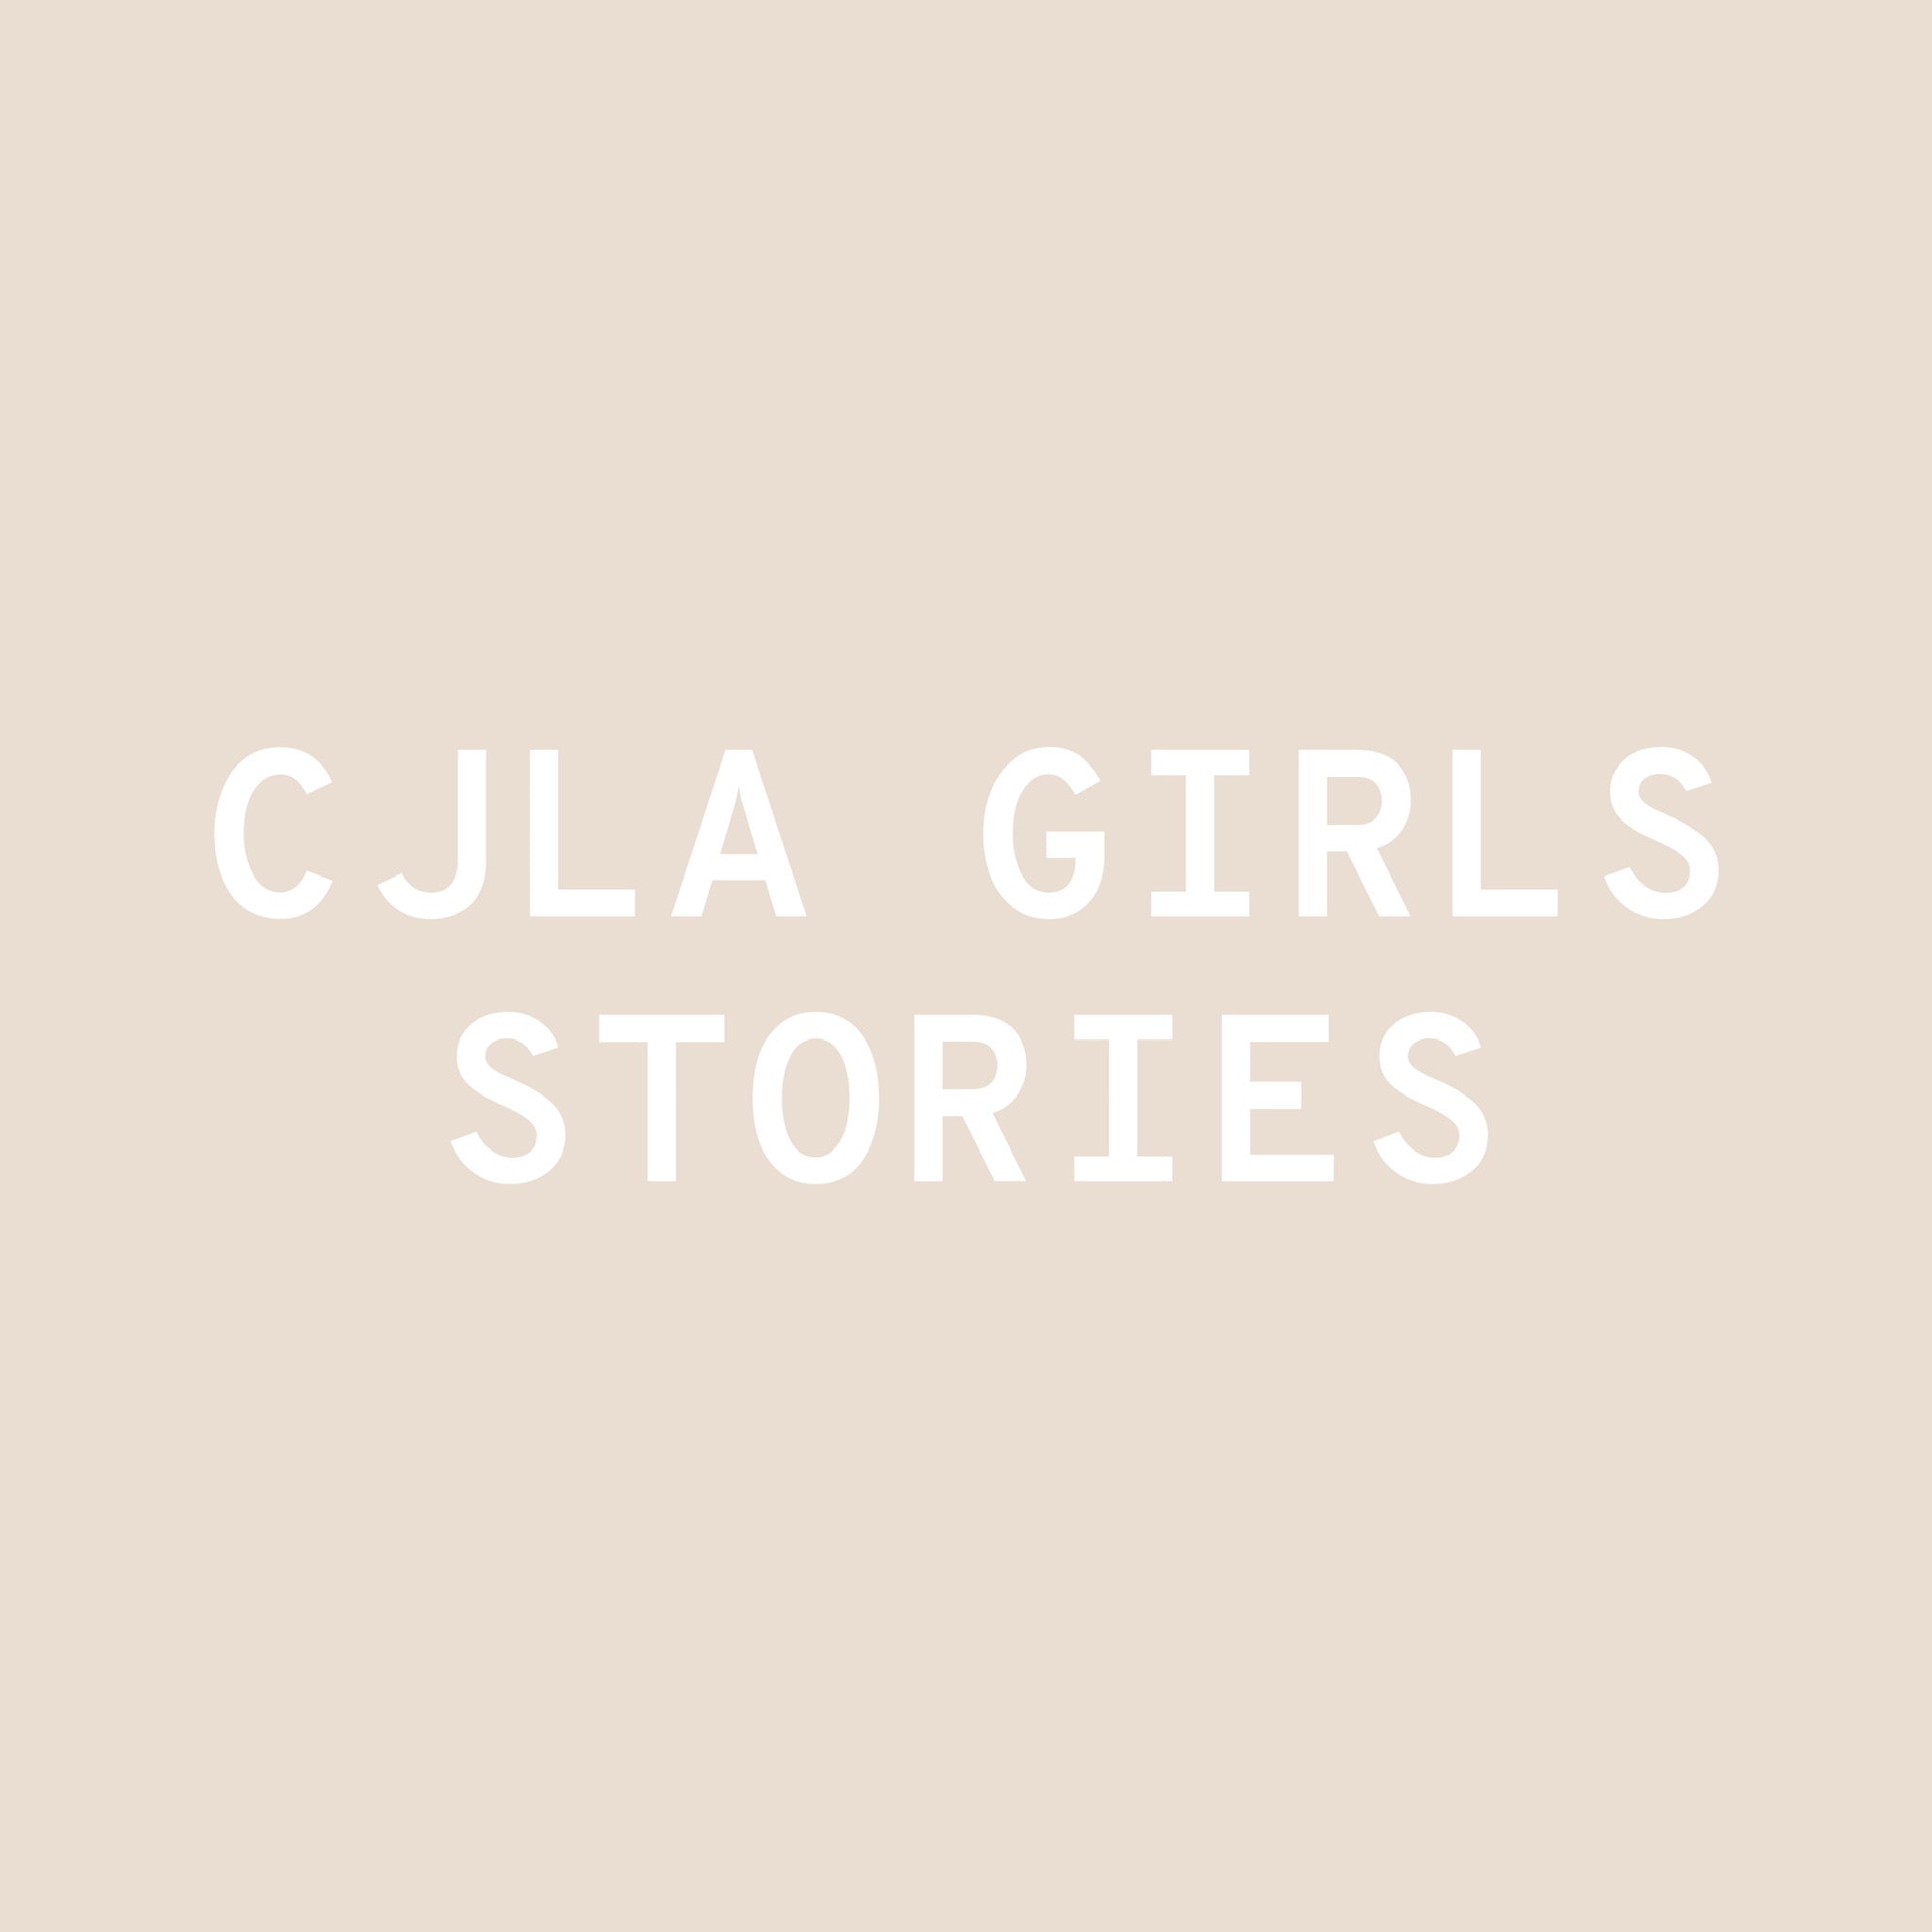 CJLA Girls Stories: Pam Ebeling